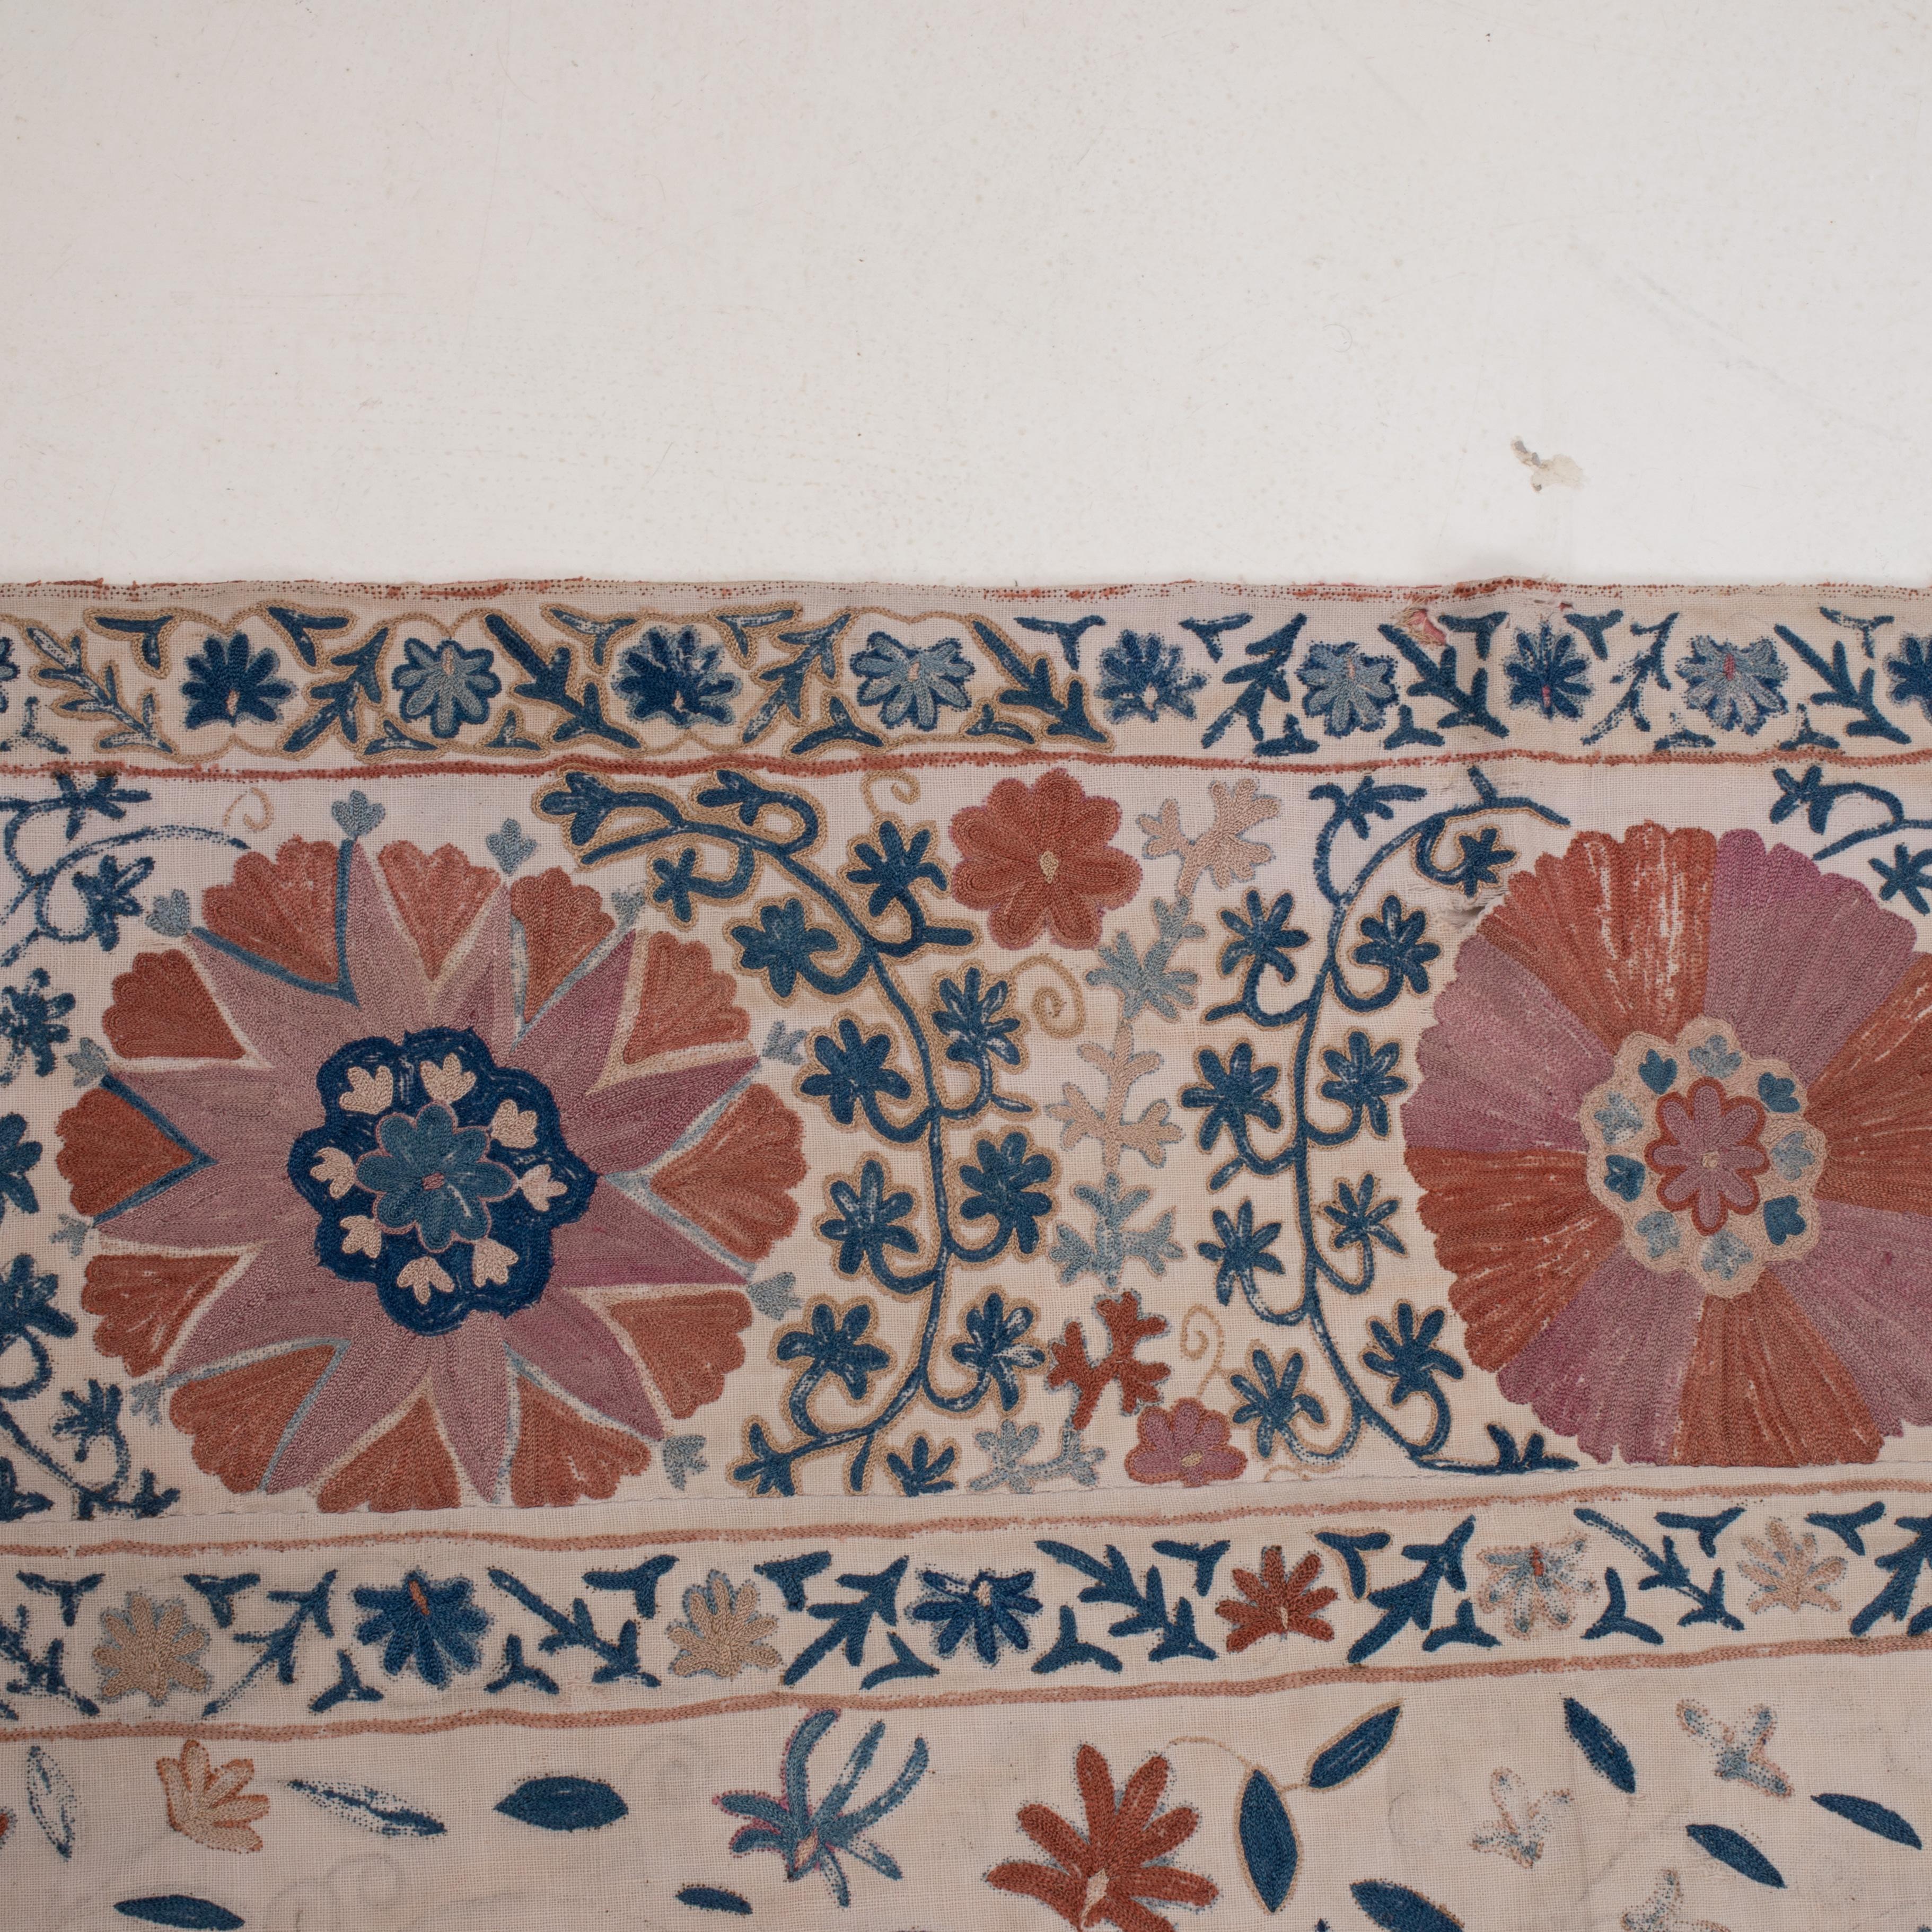 19th Century Antique Suzani with Zoomorphic Design Elements, Bukhara Uzbekistan, Late 19th C For Sale